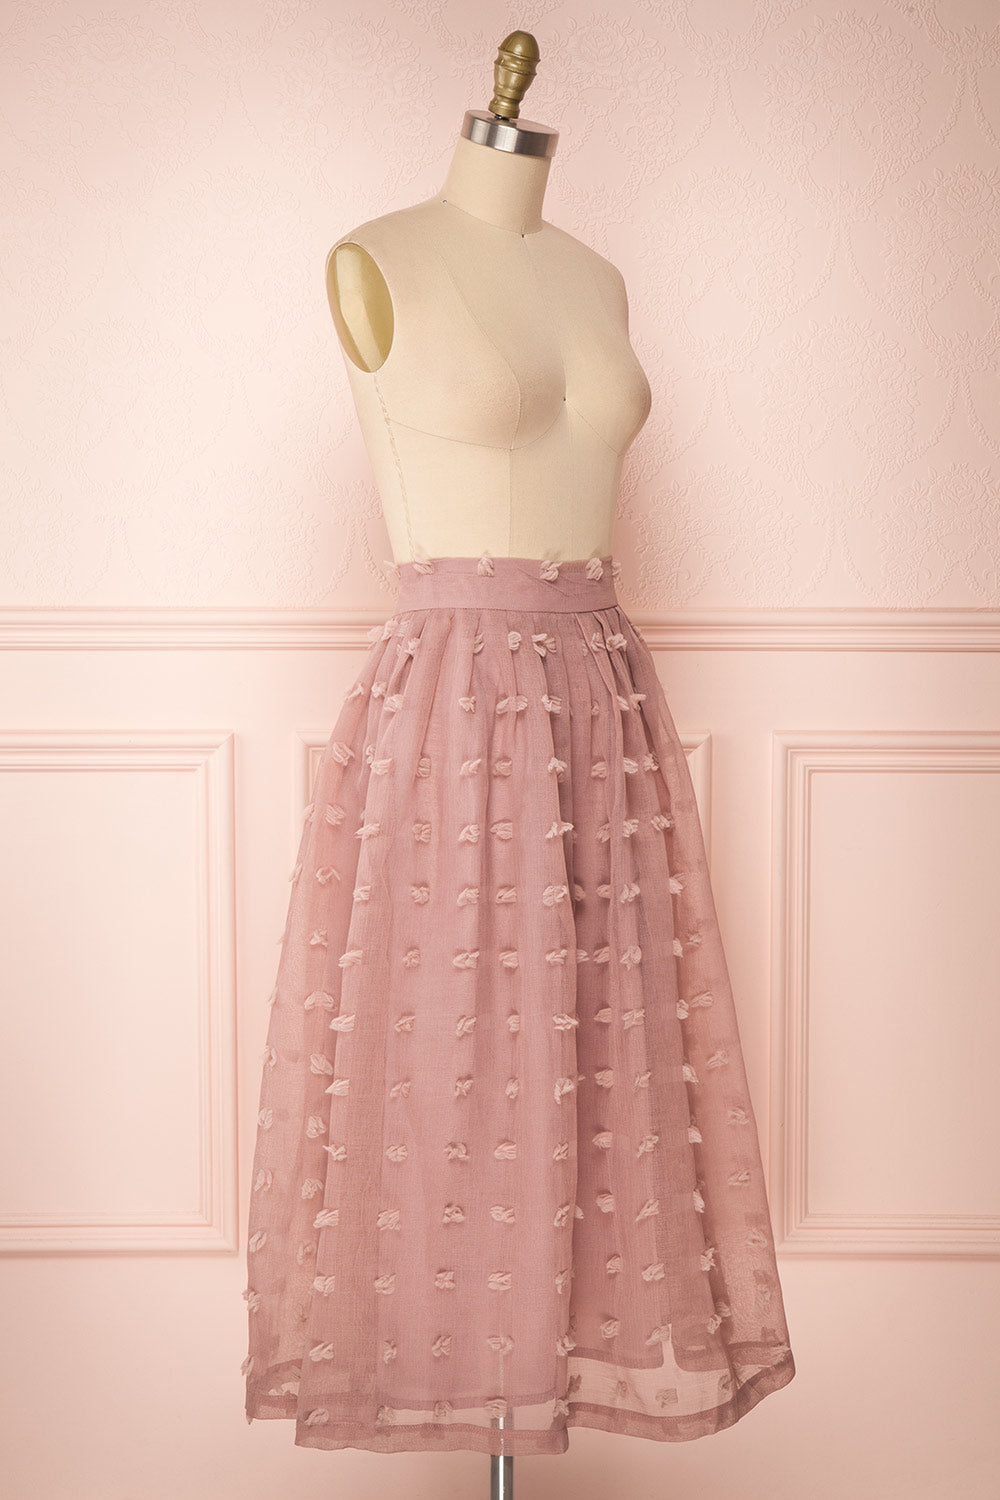 Flavie Rose Pink A-Line Skirt | Jupe Ligne A | Boutique 1861 side view 